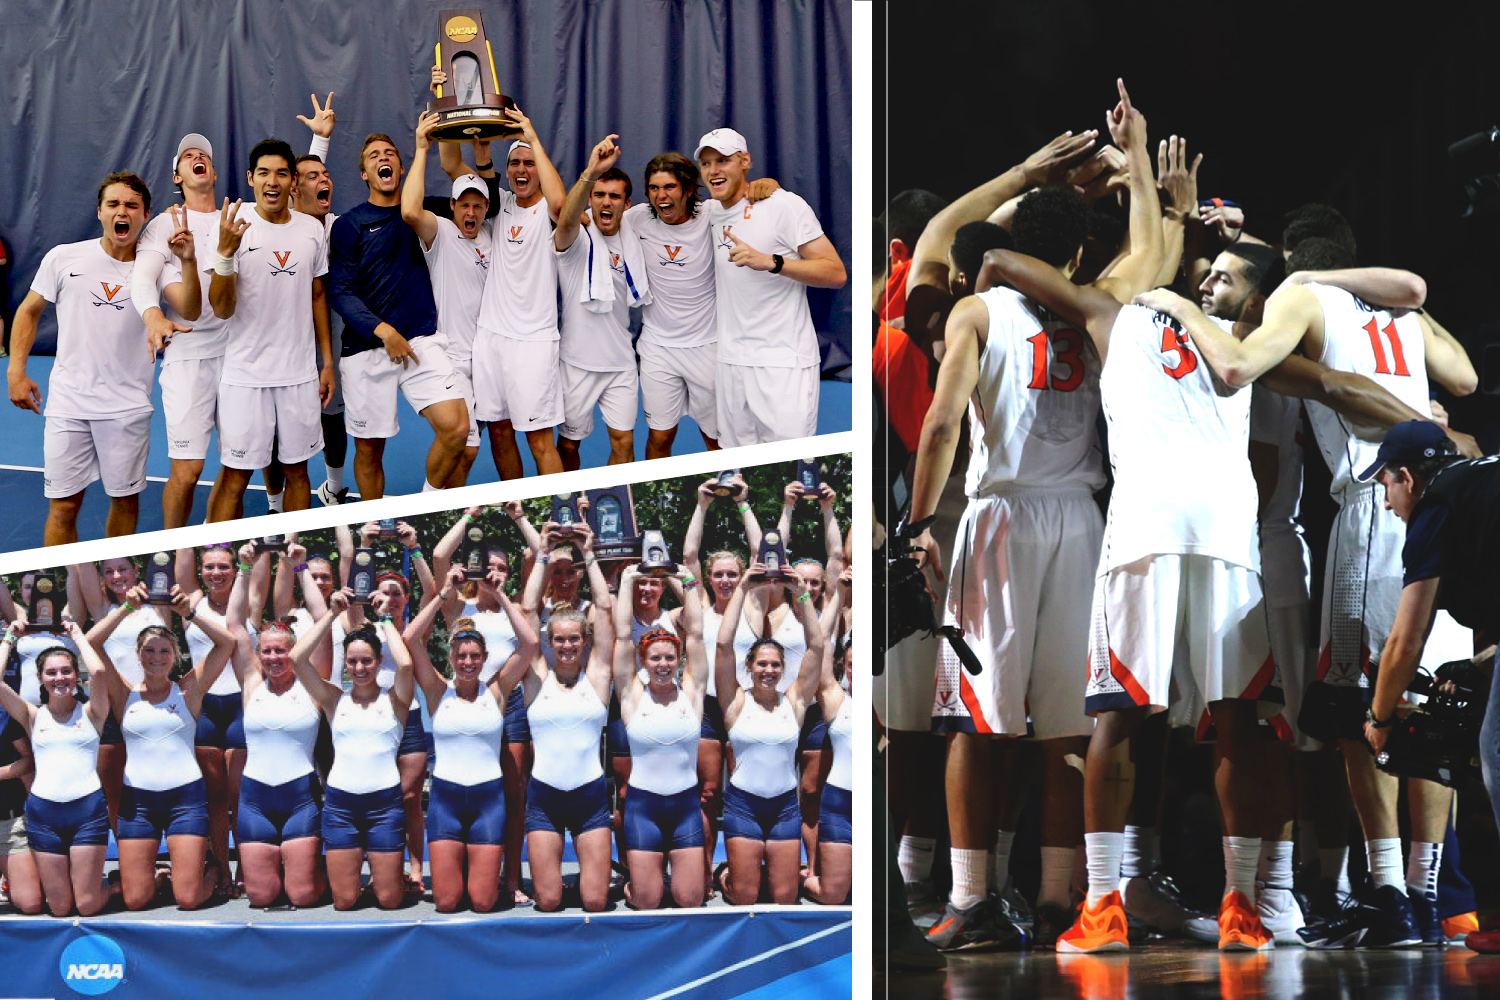 Collage of UVA sports teams winning NCAA championships